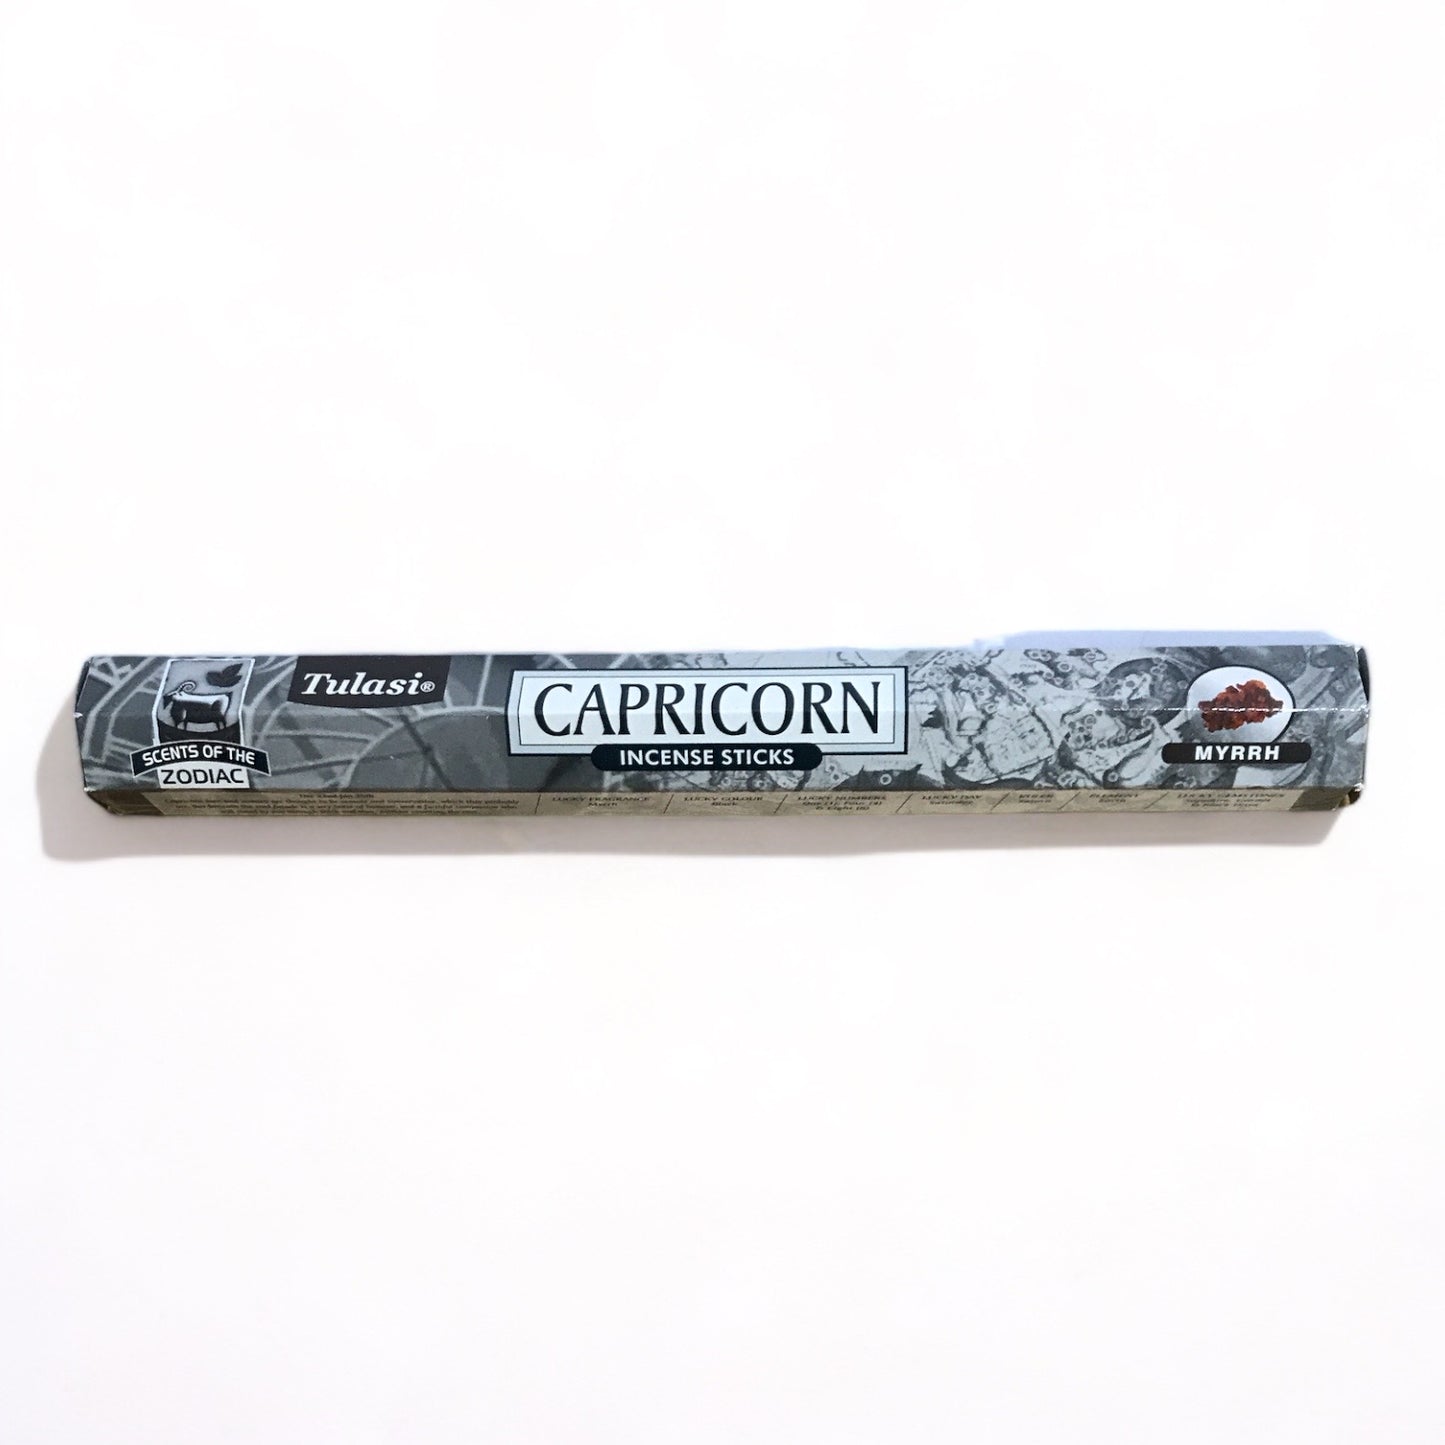 Capricorn Incense Sticks - Tulasi